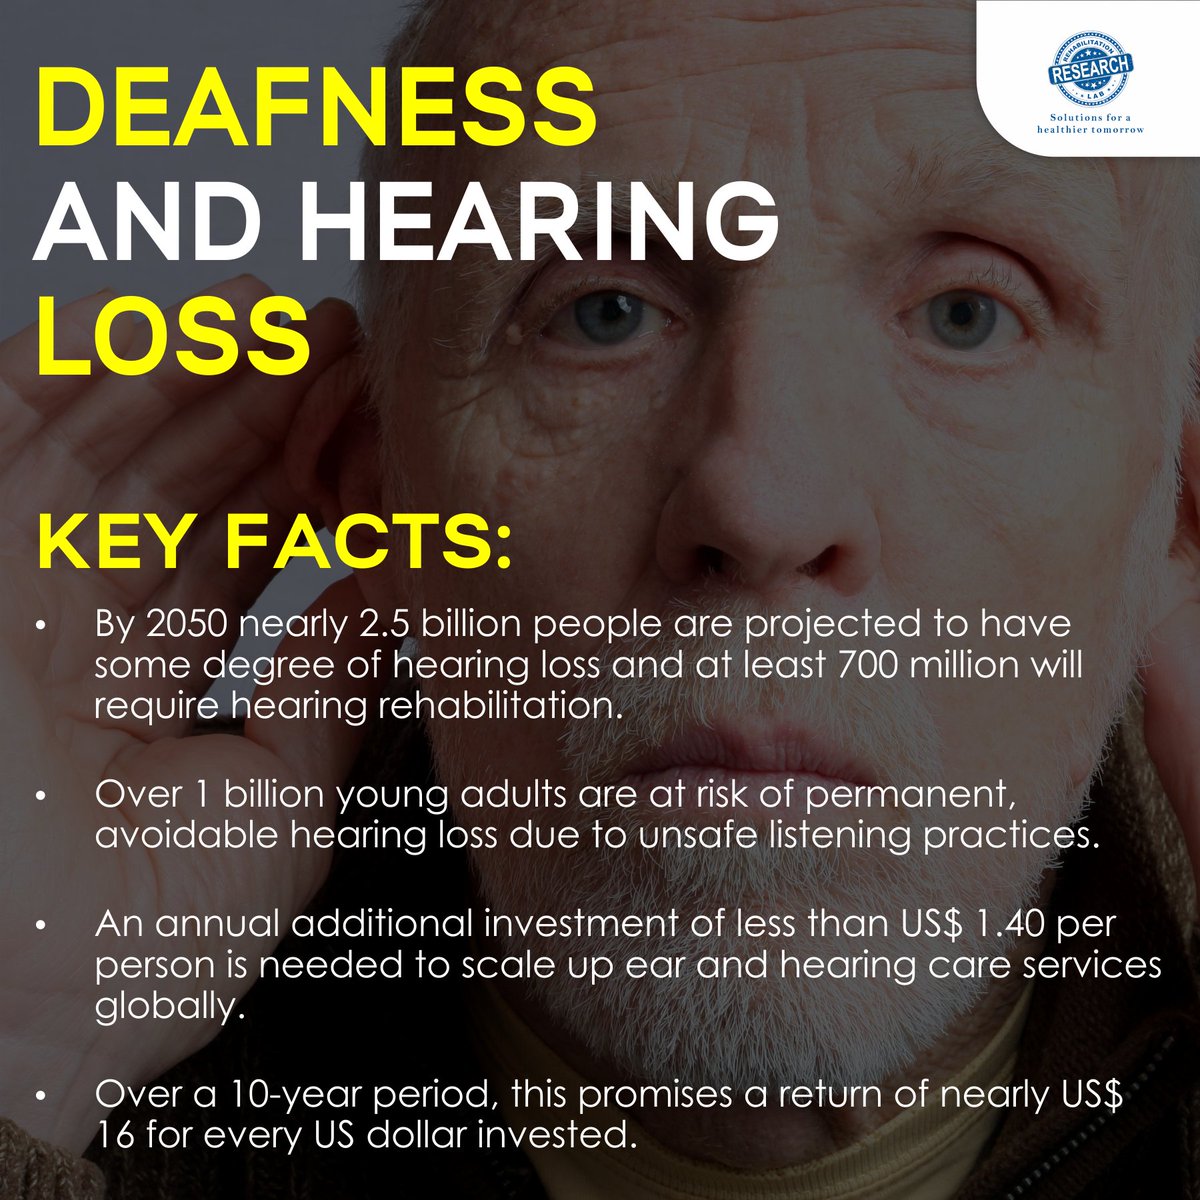 DEAFNESS AND HEARING LOSS
-KEY FACTS:

Hashtags
#HearingLossAwareness
#DeafnessMatters
#GlobalHearingCare
#HearingHealth
#2Point5BillionStrong
#HearingLossPrevention
#SafeListening
#HearingRehabilitation
#EarCare
#InvestInHearingHealth
#ProtectYourHearing
#NoisyWorld
#1BillionAt